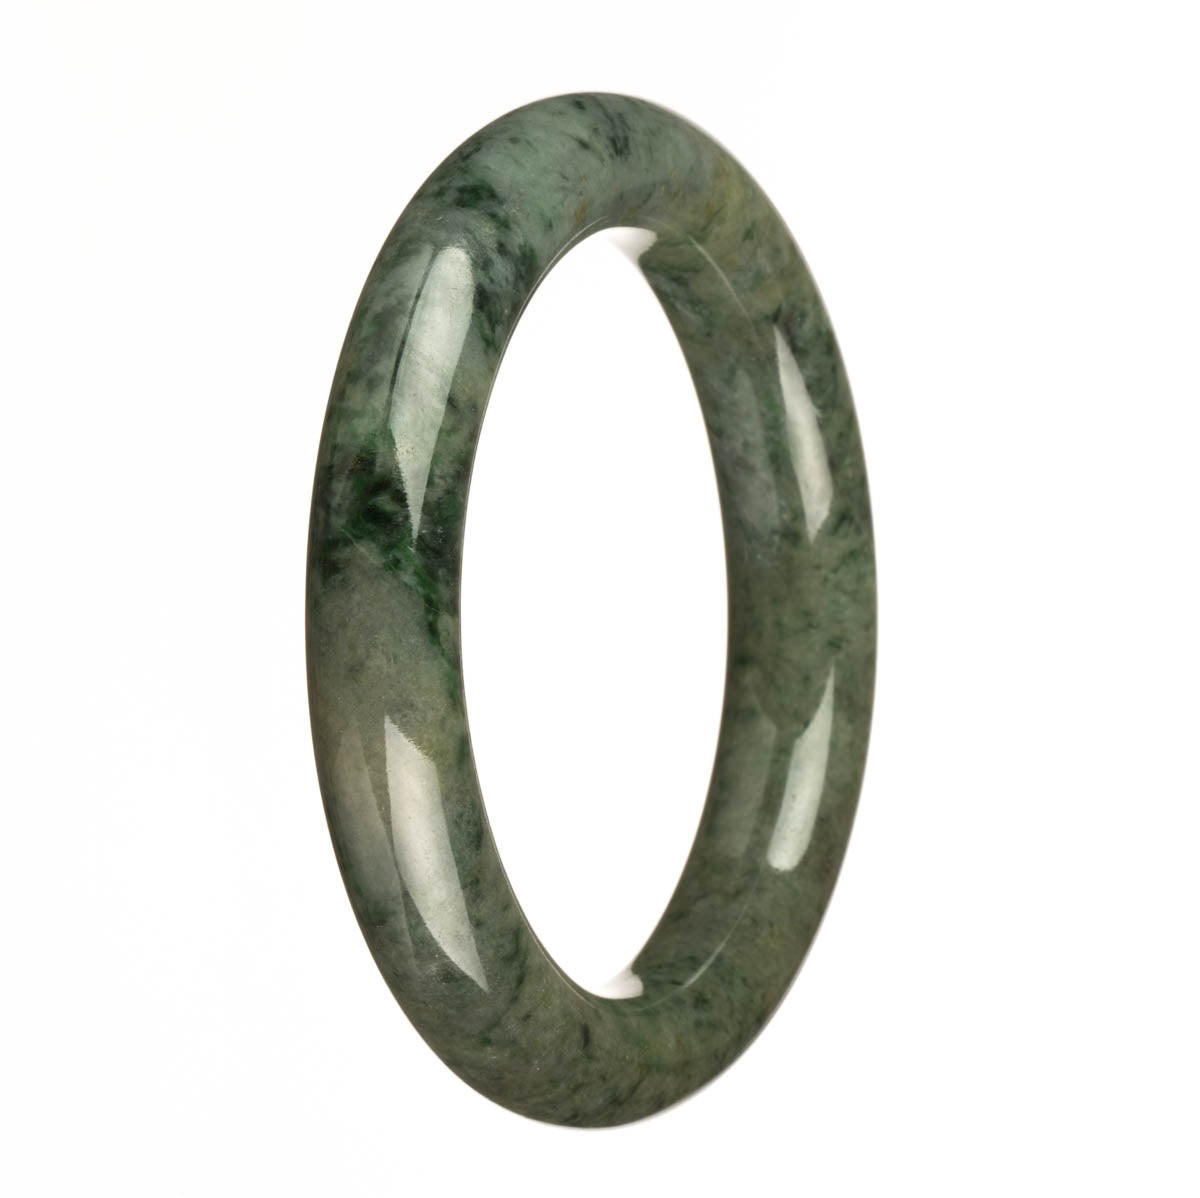 A petite round dark green jadeite jade bangle bracelet with apple green patterns.